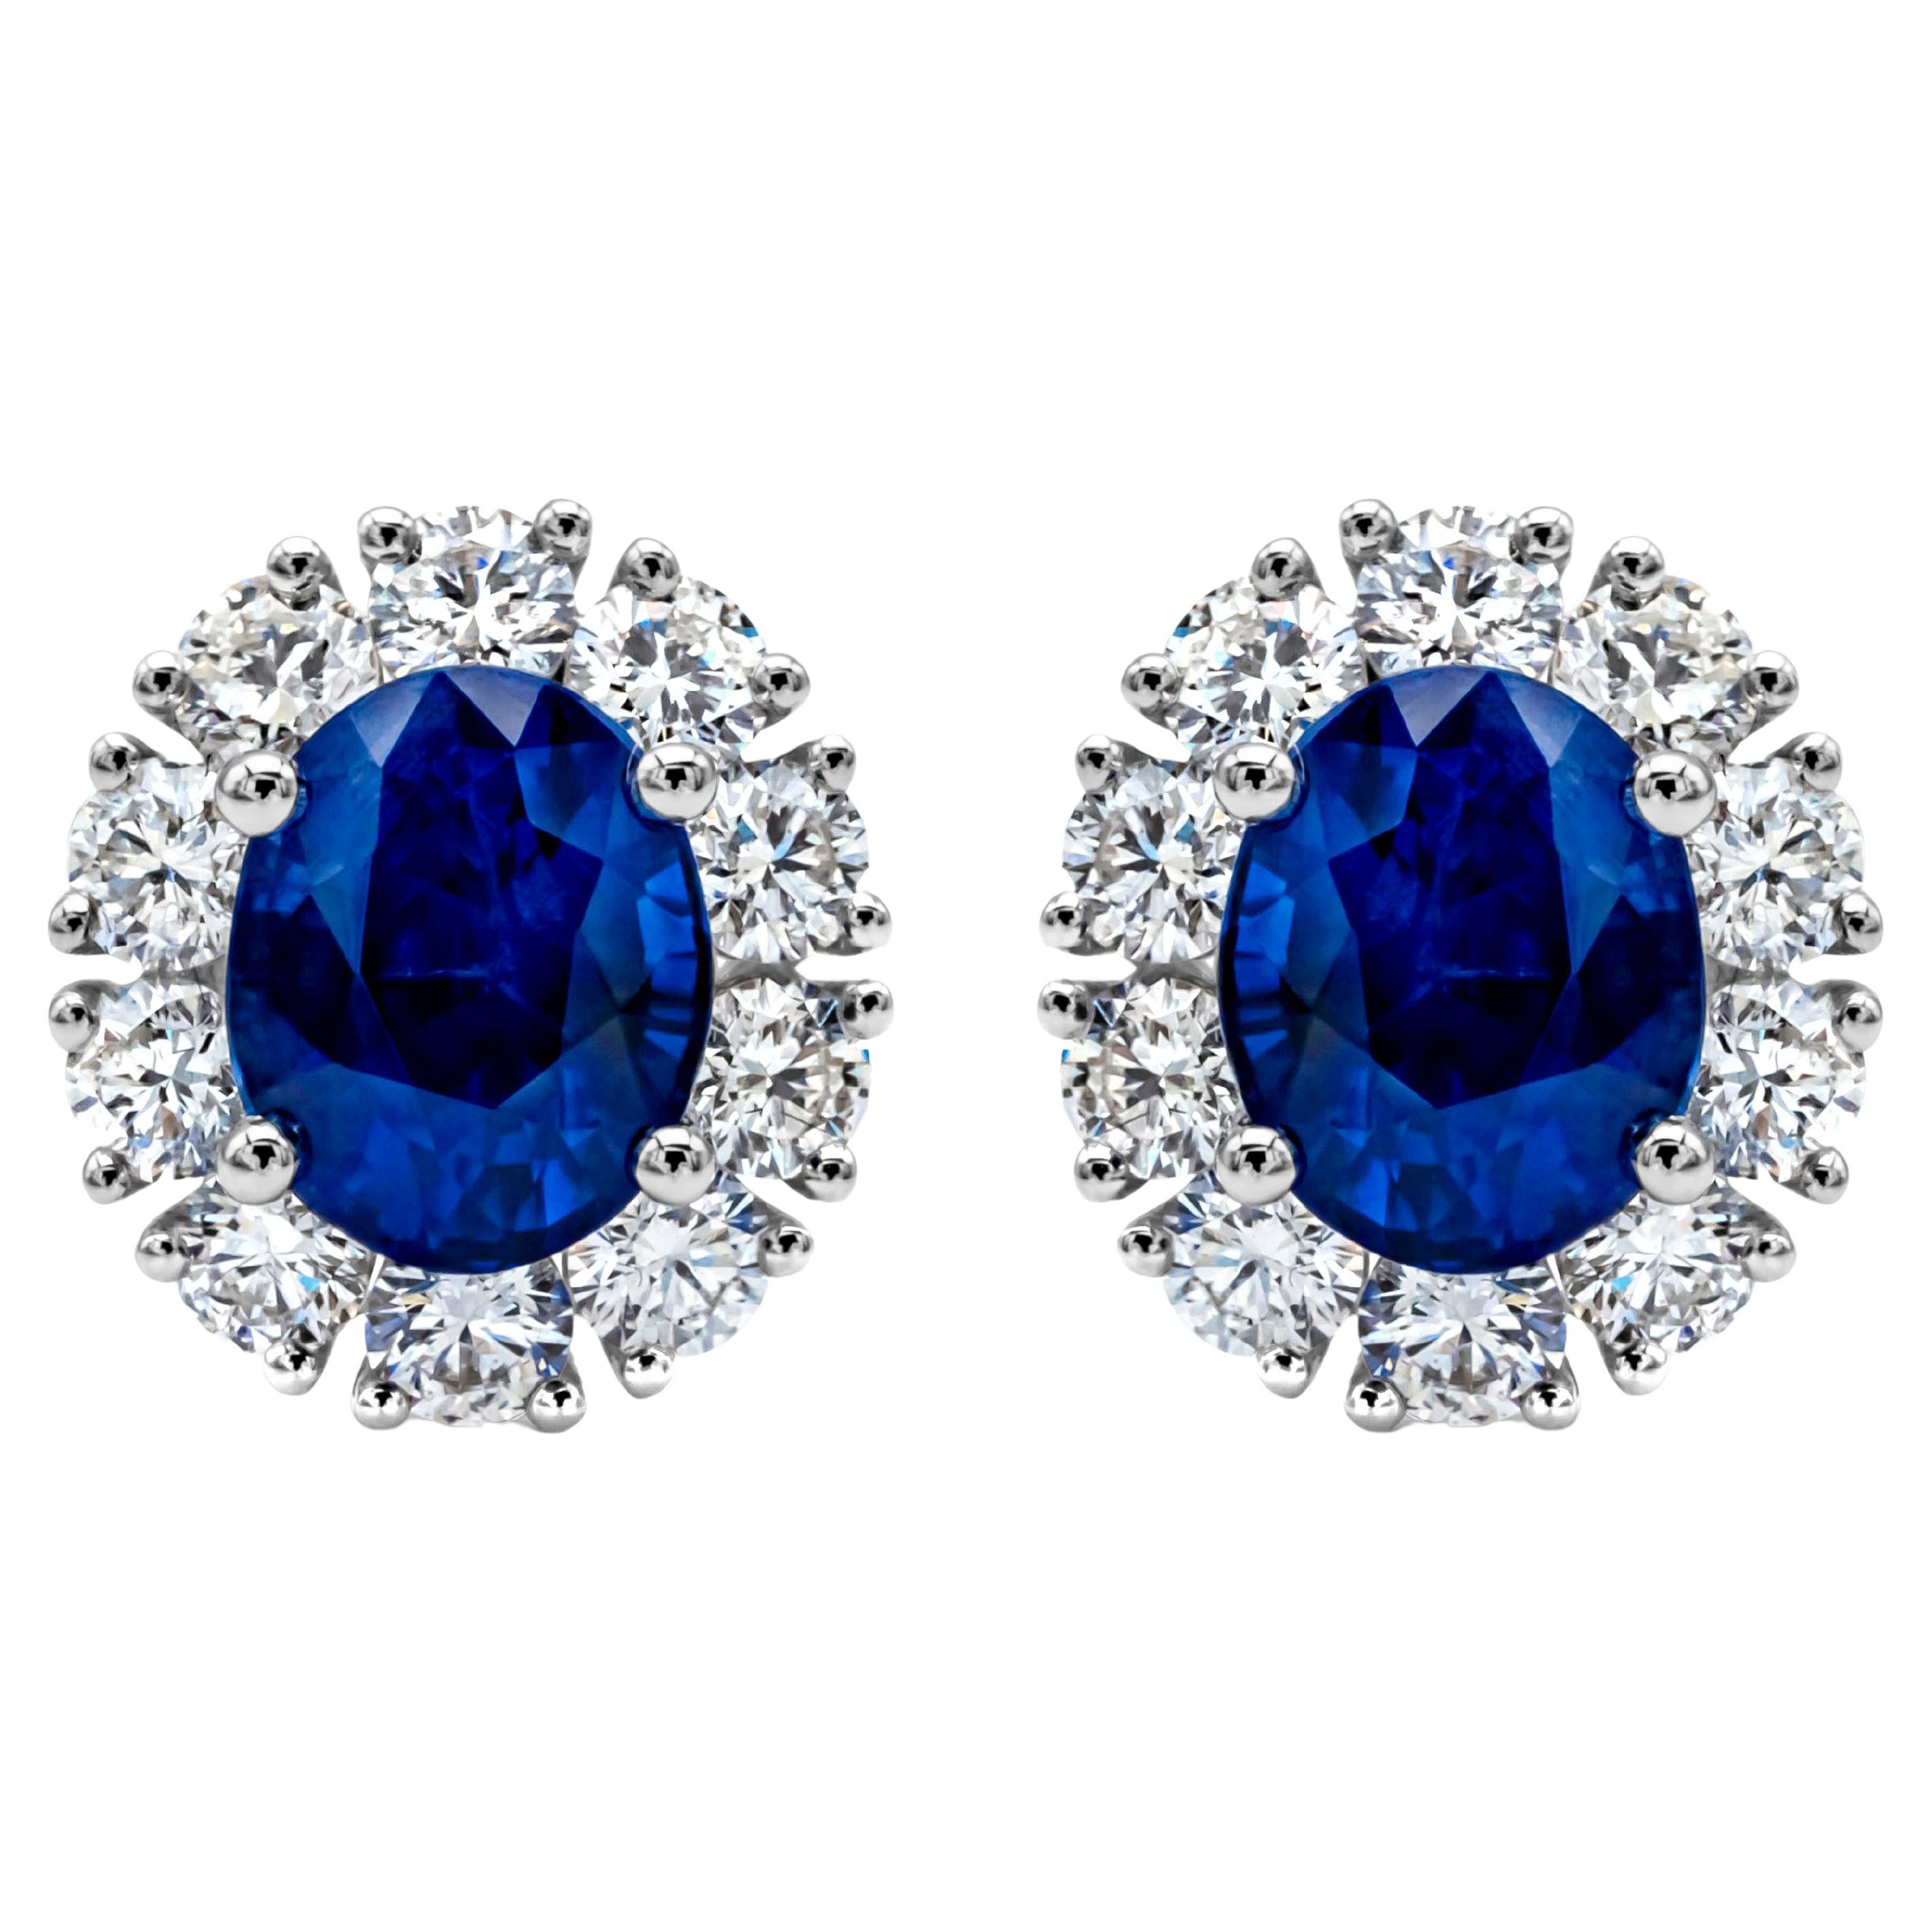 Roman Malakov 2.29 Carats Total Oval Cut Blue Sapphire & Diamond Stud Earrings